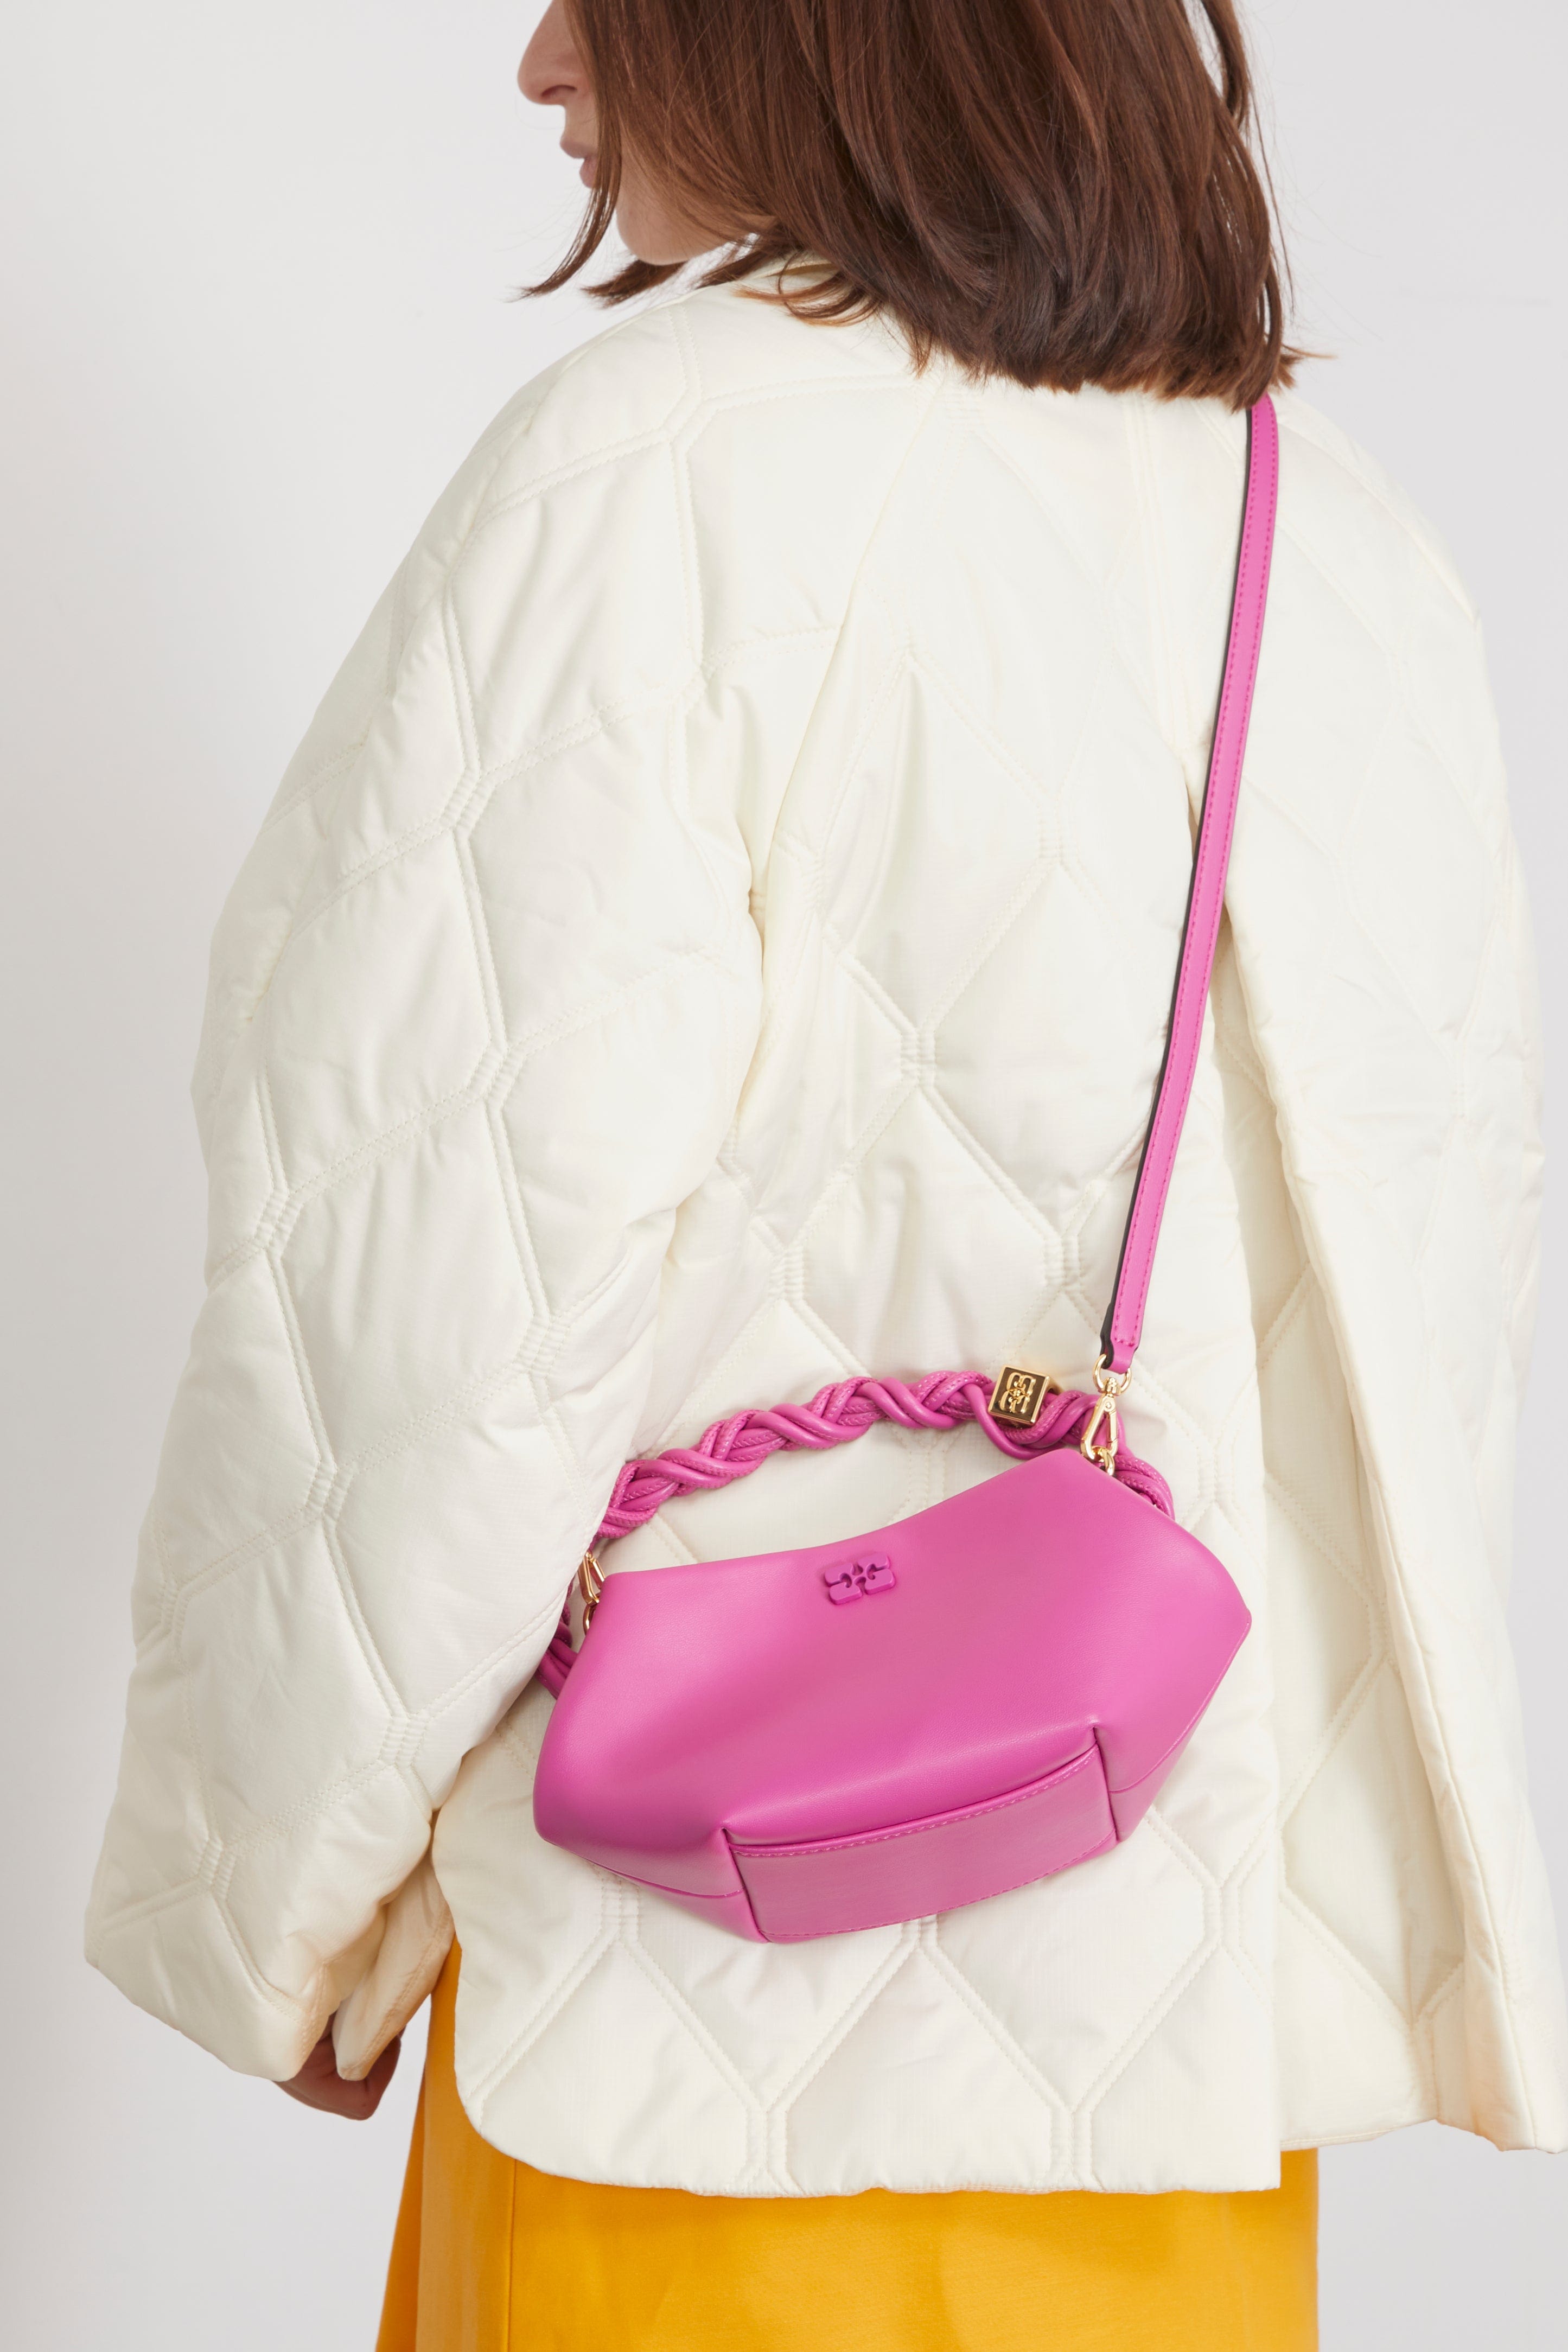 Ganni Top Handle Bags Bou Bag Mini in Shocking Pink Ganni Bou Bag Mini in Shocking Pink